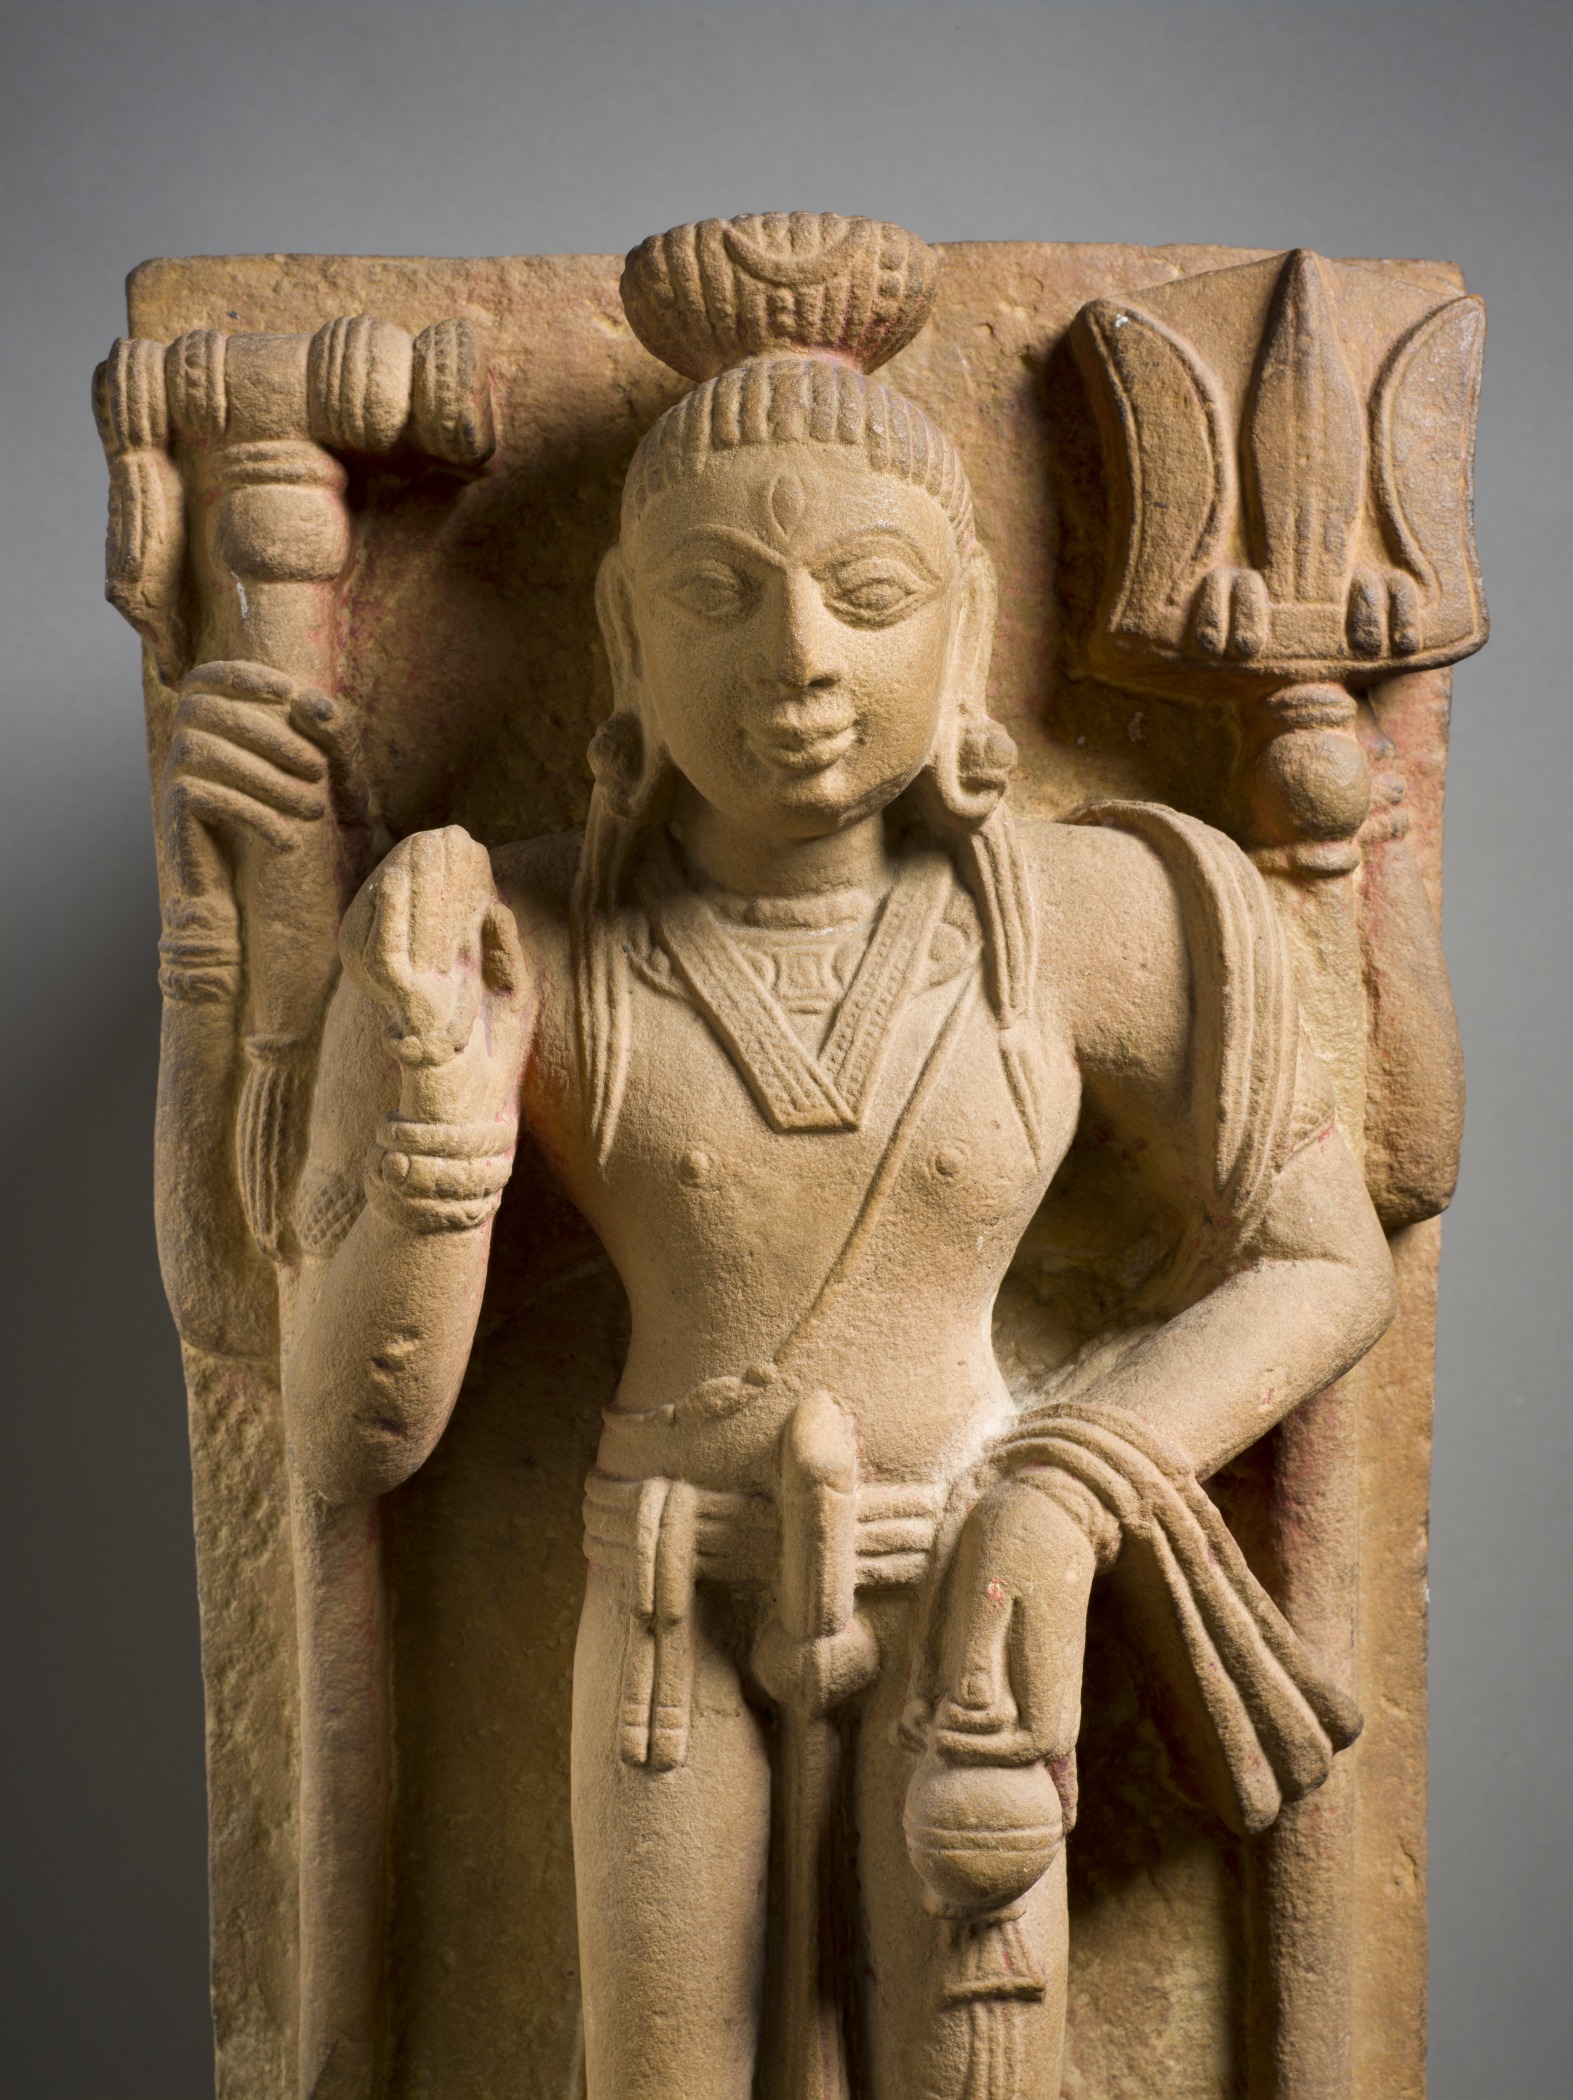 https://upload.wikimedia.org/wikipedia/commons/8/8c/The_Hindu_God_Shiva_LACMA_M.69.15.1_%282_of_3%29.jpg